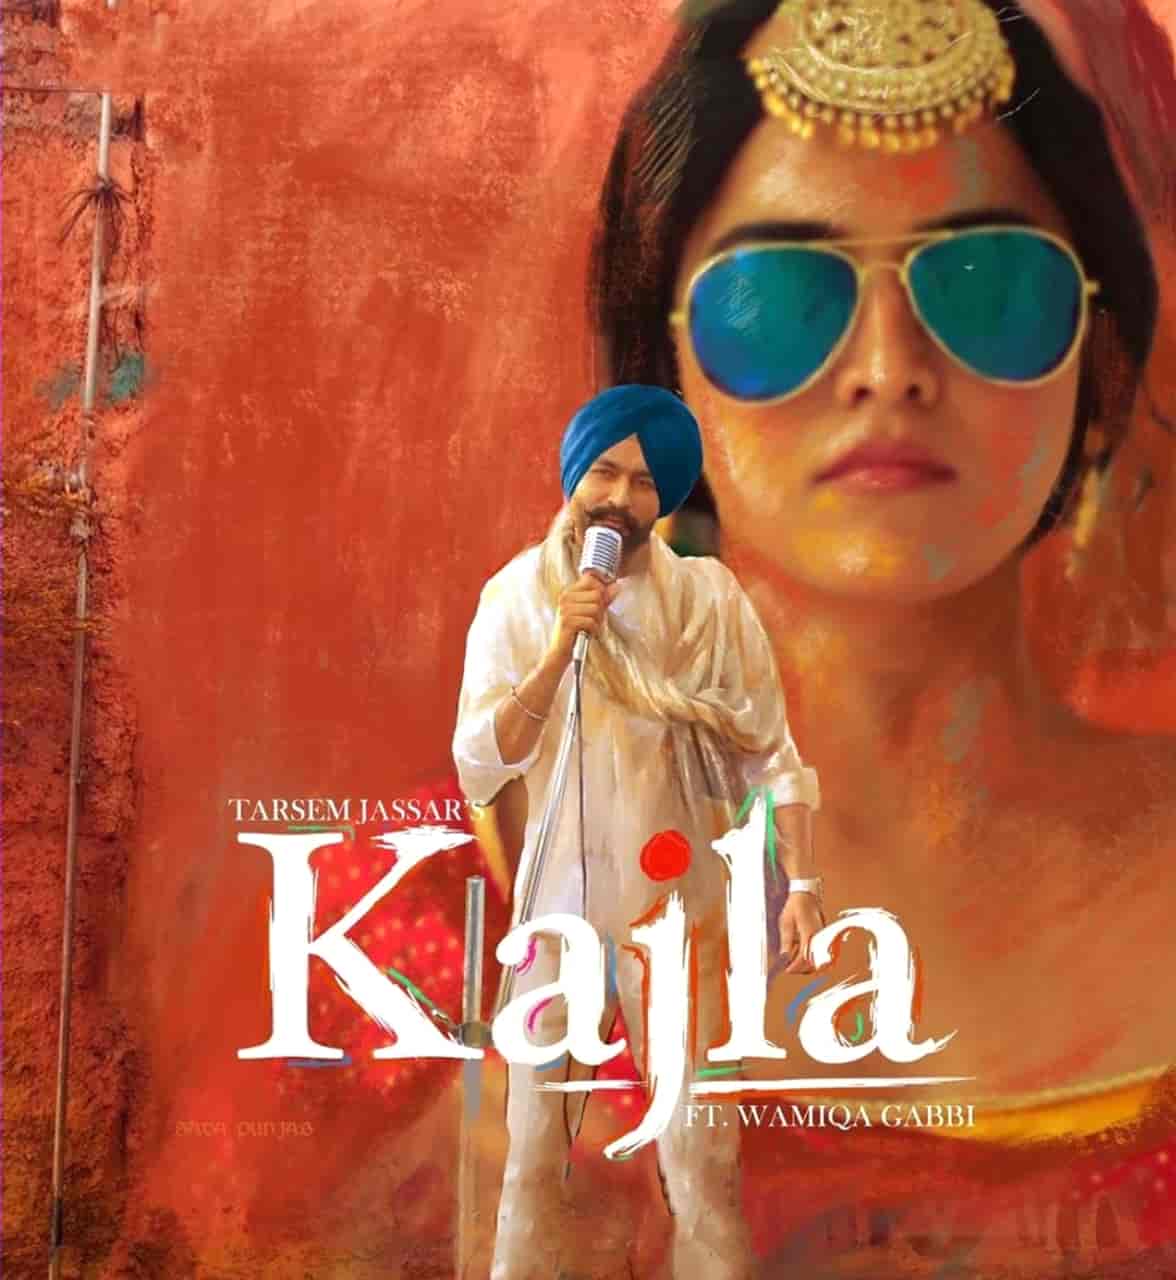 Kajla Punjabi Song Image Features Wamiqa Gabbi by Tarsem Jassar